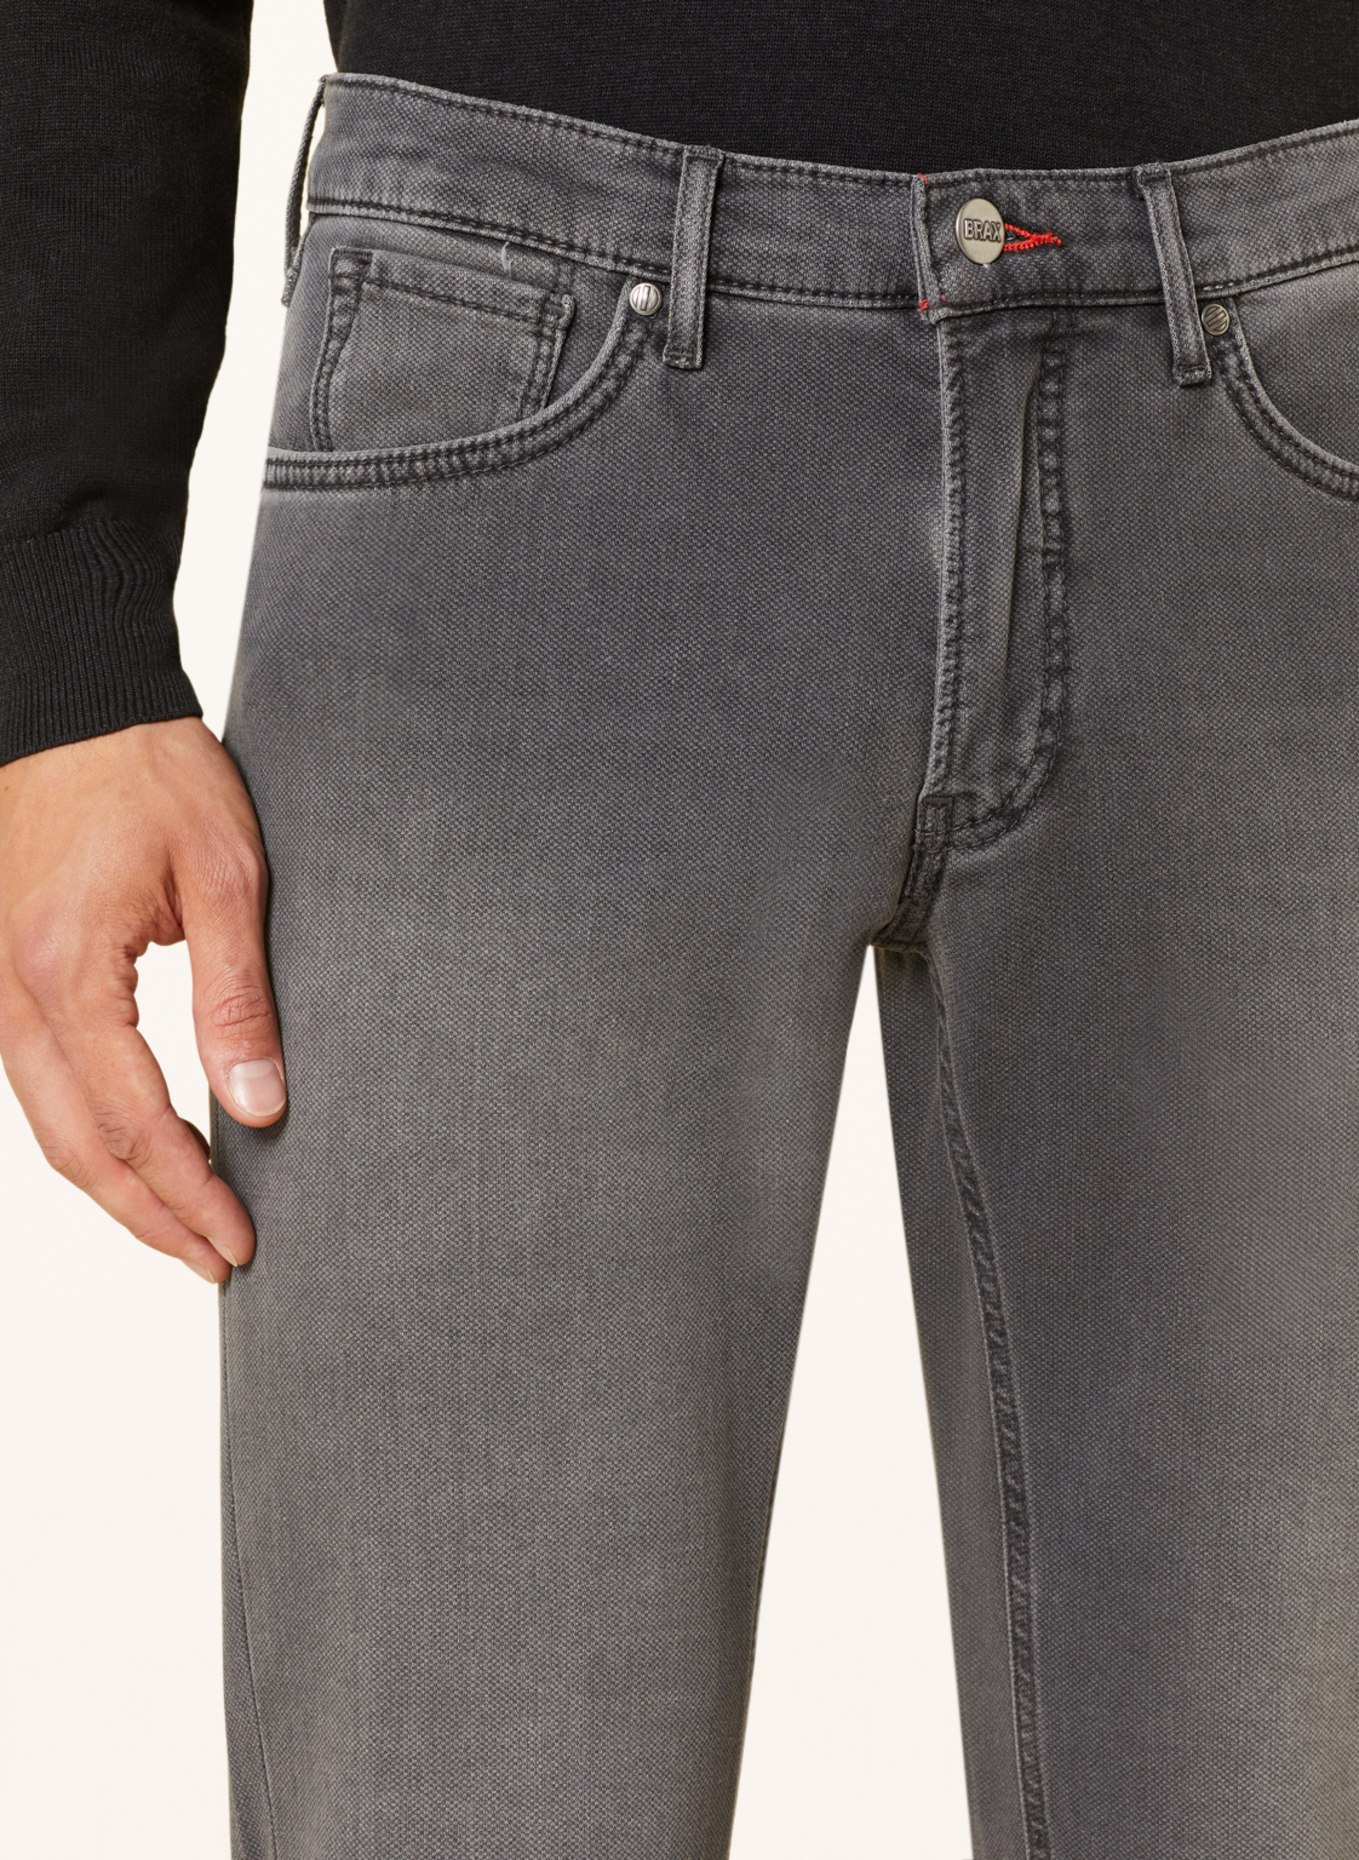 BRAX Jeans CHUCK Modern Fit in 05 slate grey used